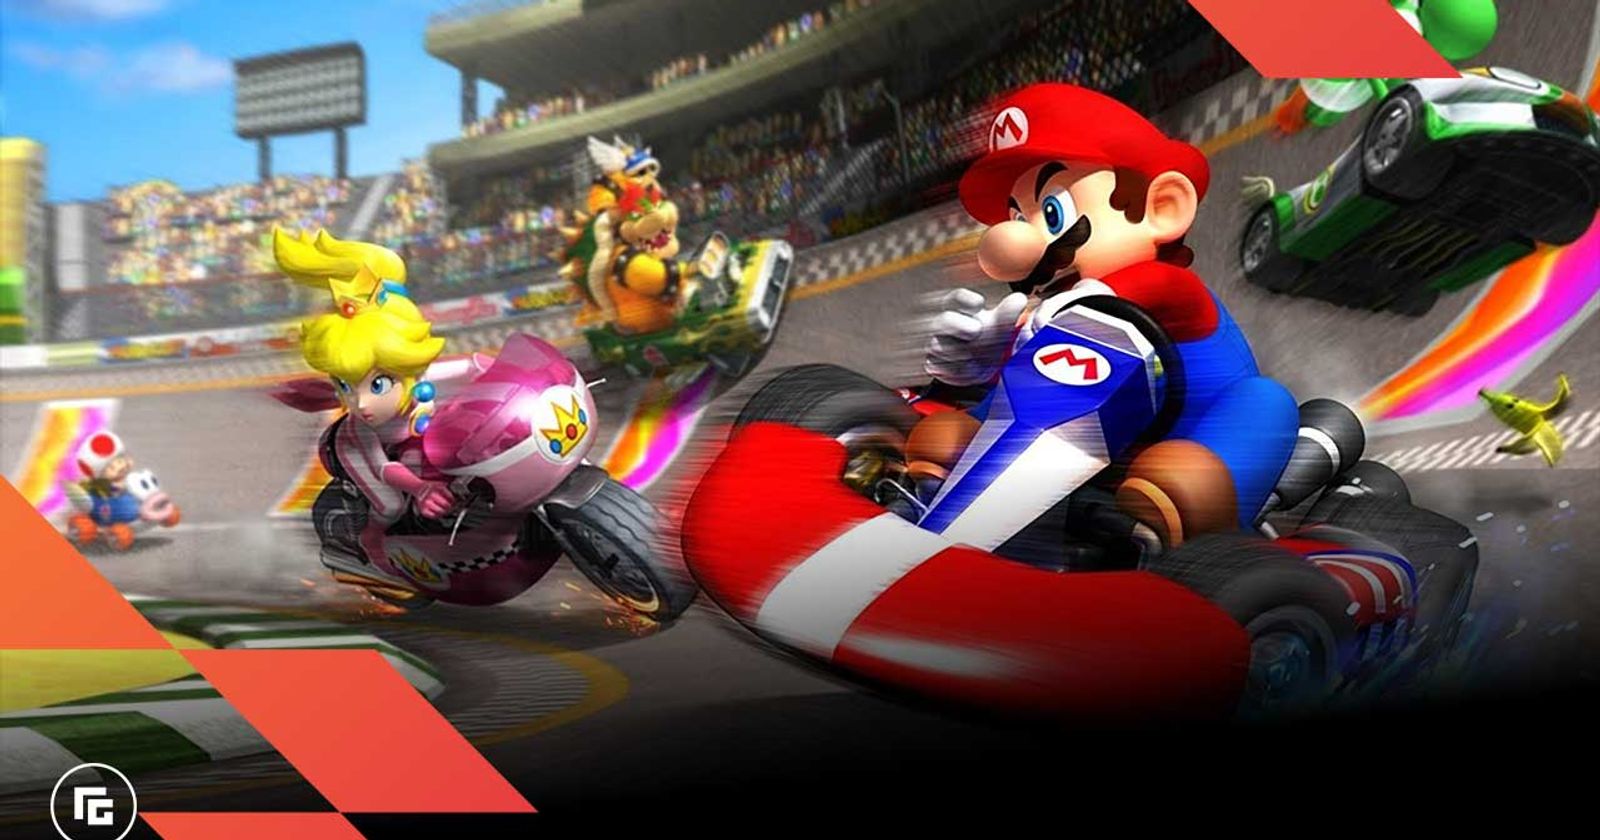 Mario Kart Tour Characters - Full character list, rarity & more!